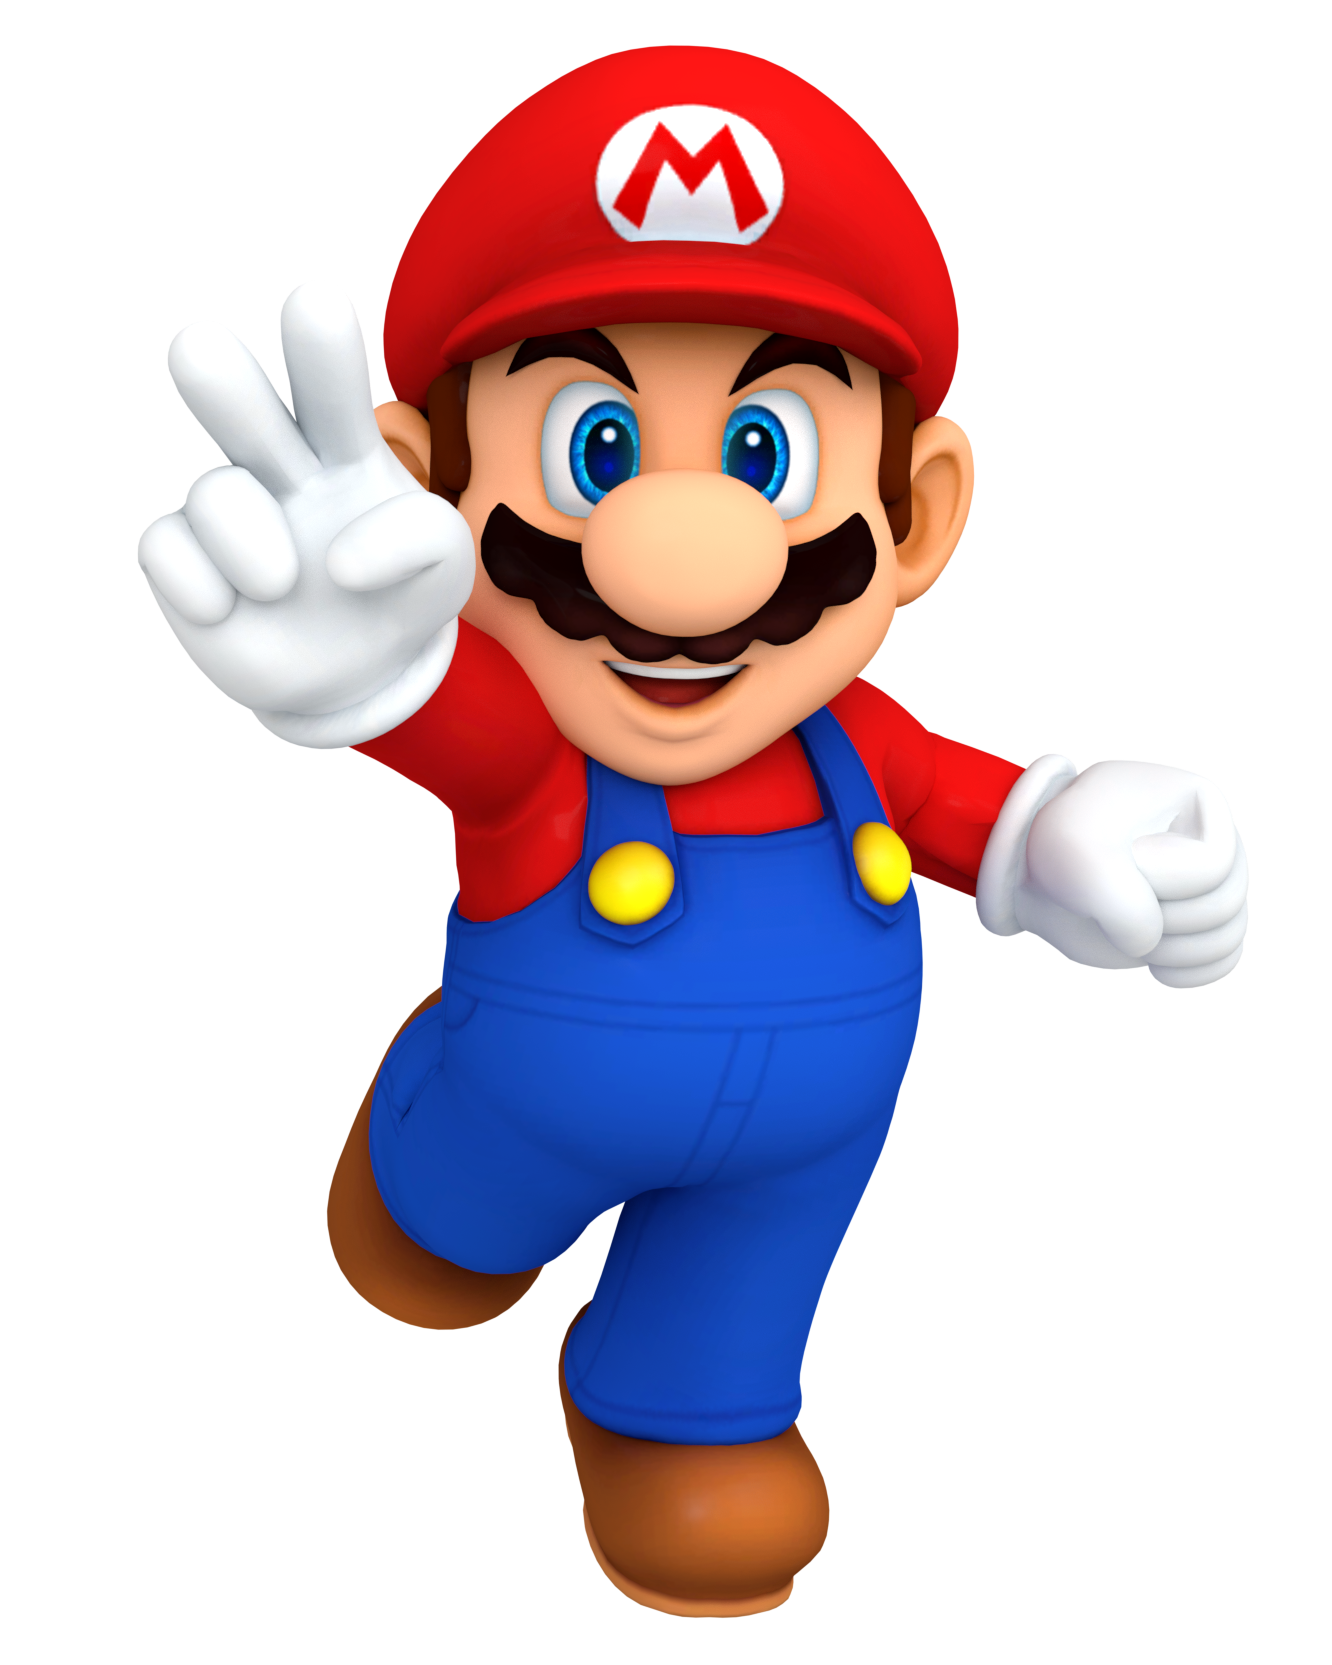 Mario bros advance. Супер Марио супермарио. Марио БРОС 3. Марио (персонаж игр). Братья Марио Nintendo.